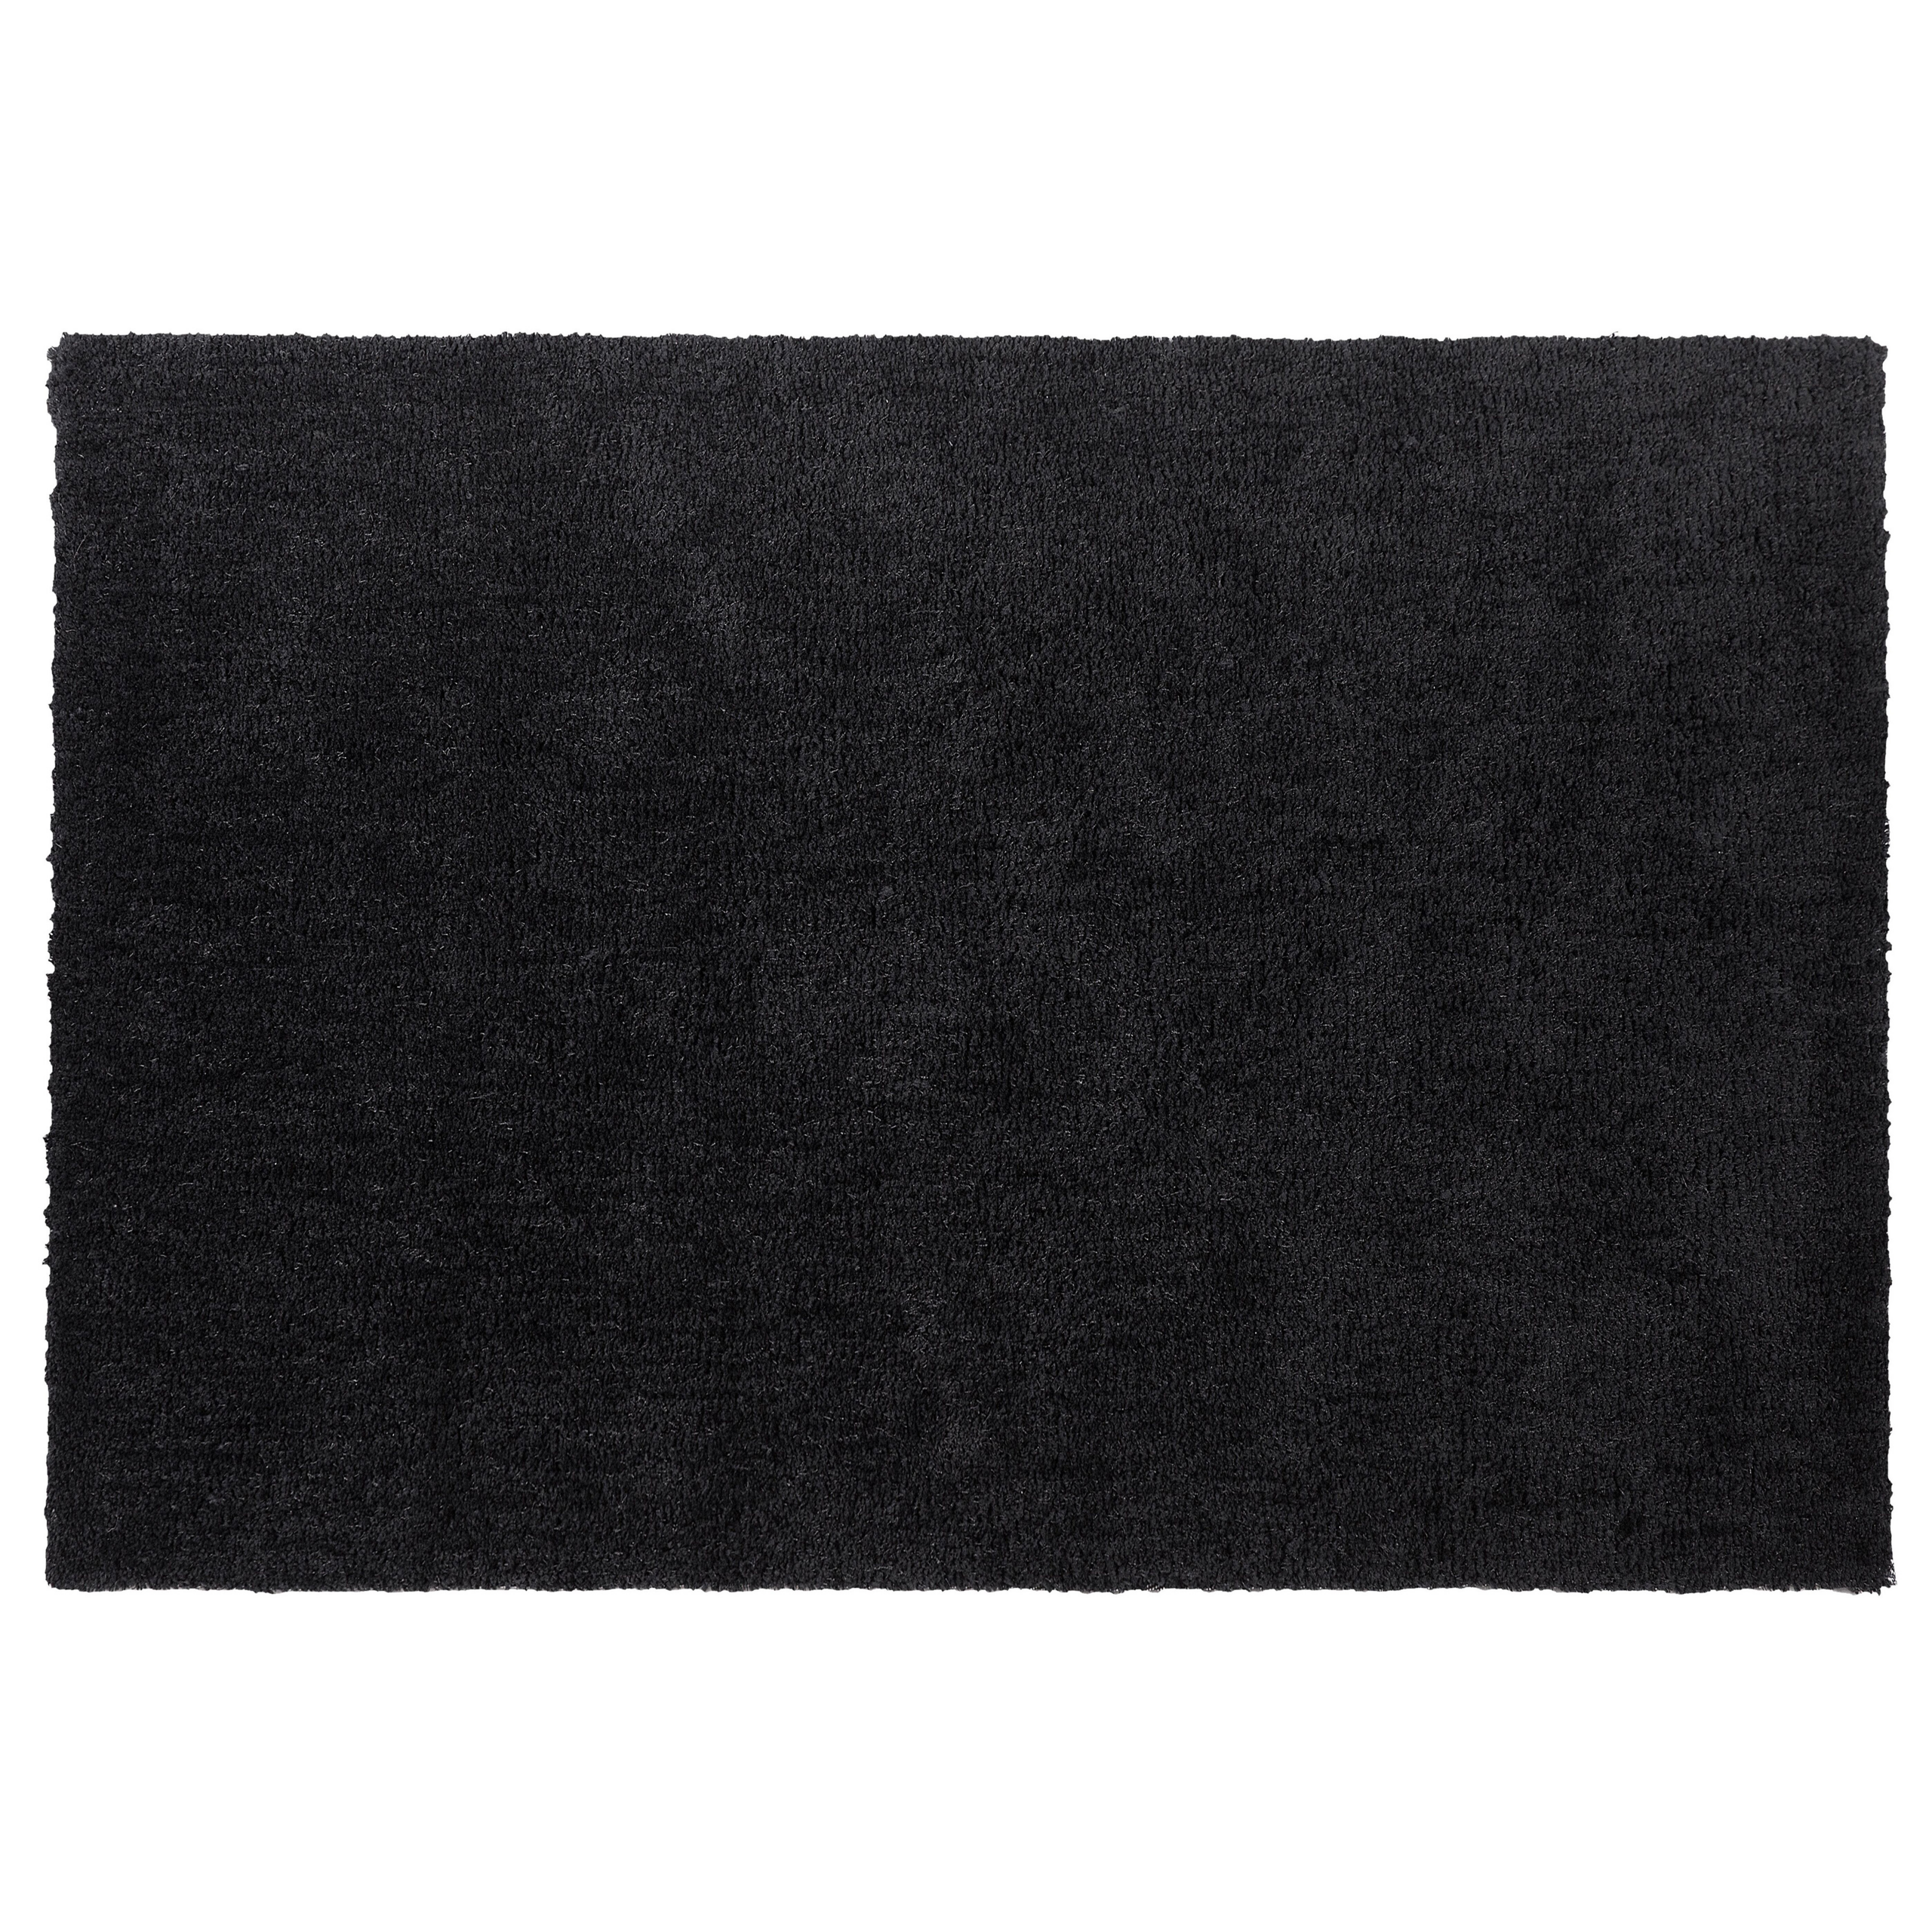 Beliani Shaggy Area Rug Black 140 x 200 cm Modern High-Pile Handmade Tufted Rectangular Carpet